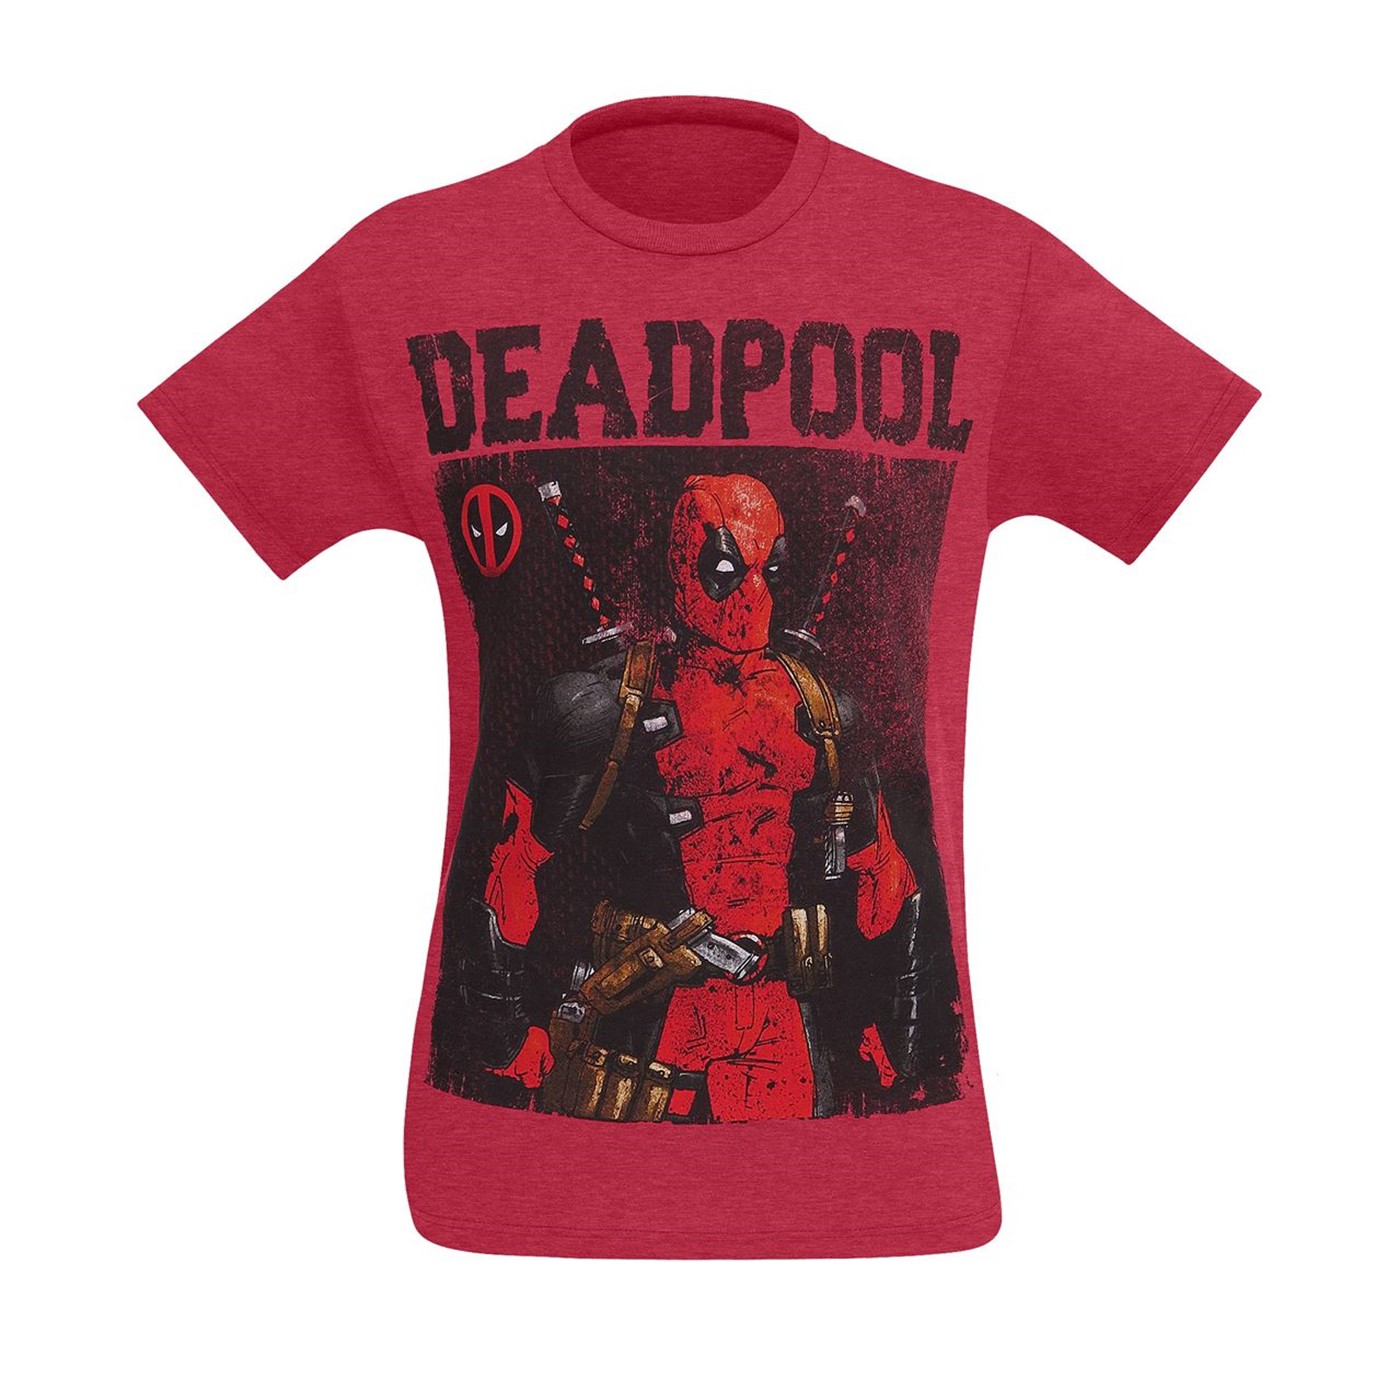 Deadpool Any Last Words? Men's T-Shirt